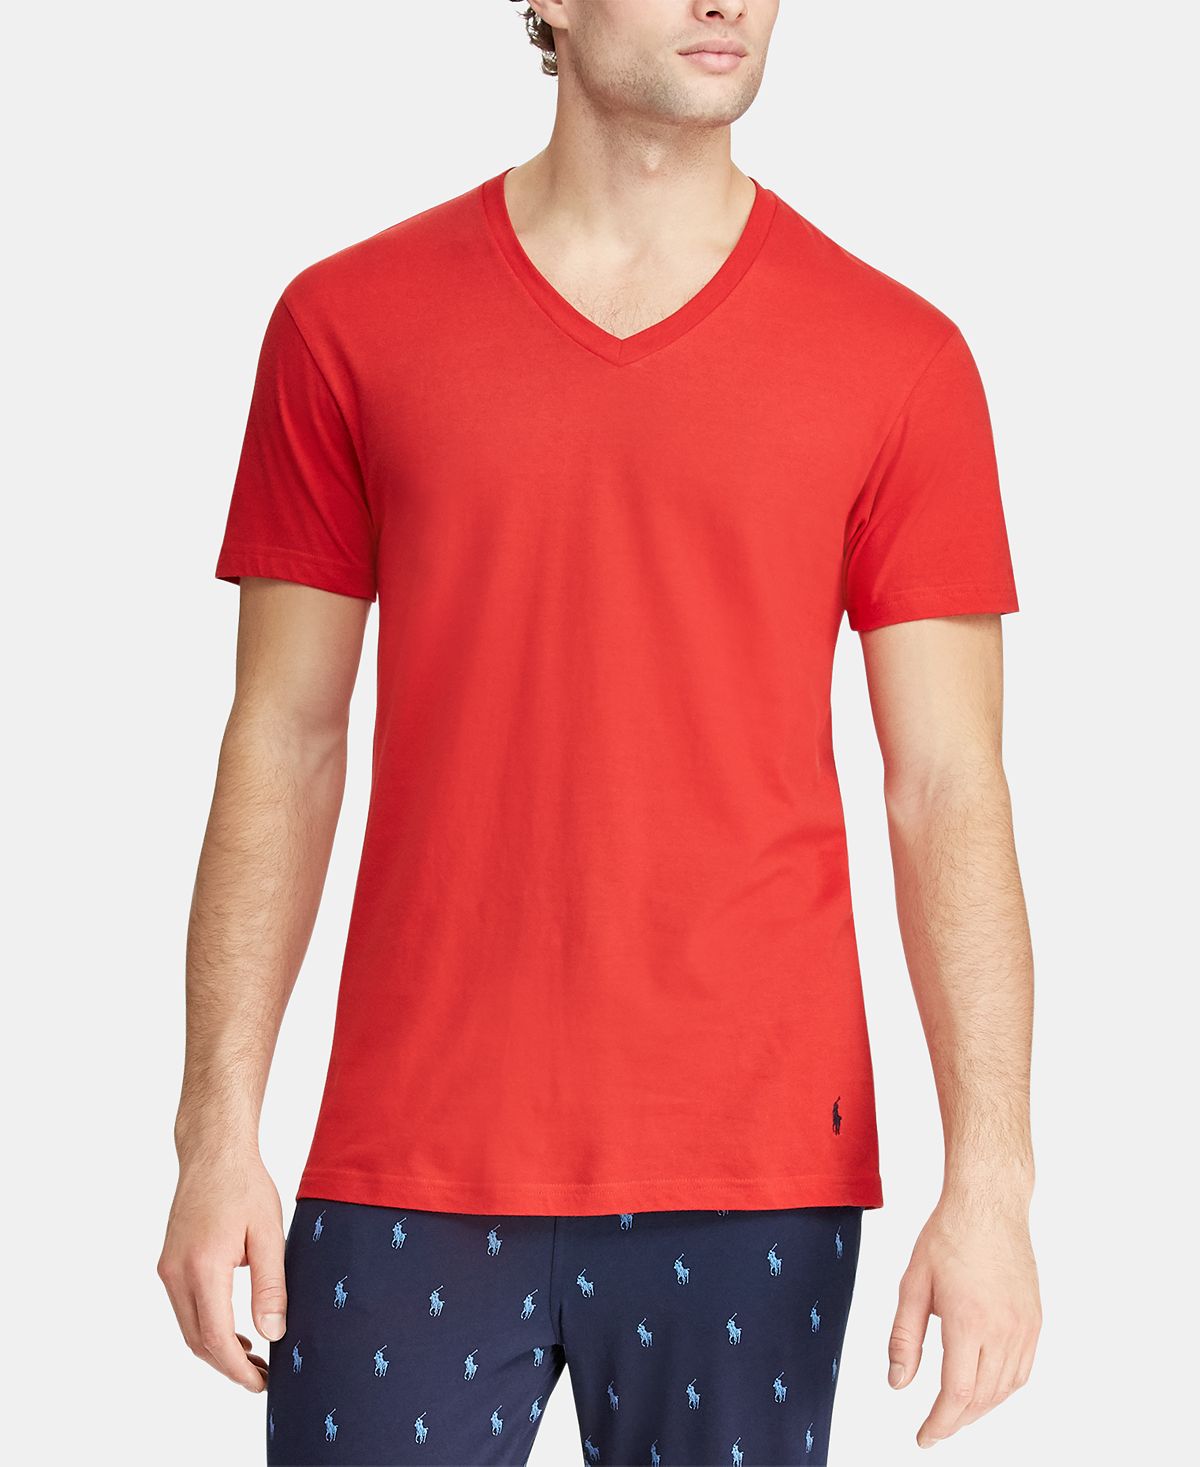 Polo Ralph Lauren Classic V-neck Cotton T-shirt 3-pk. Royal/red/navy